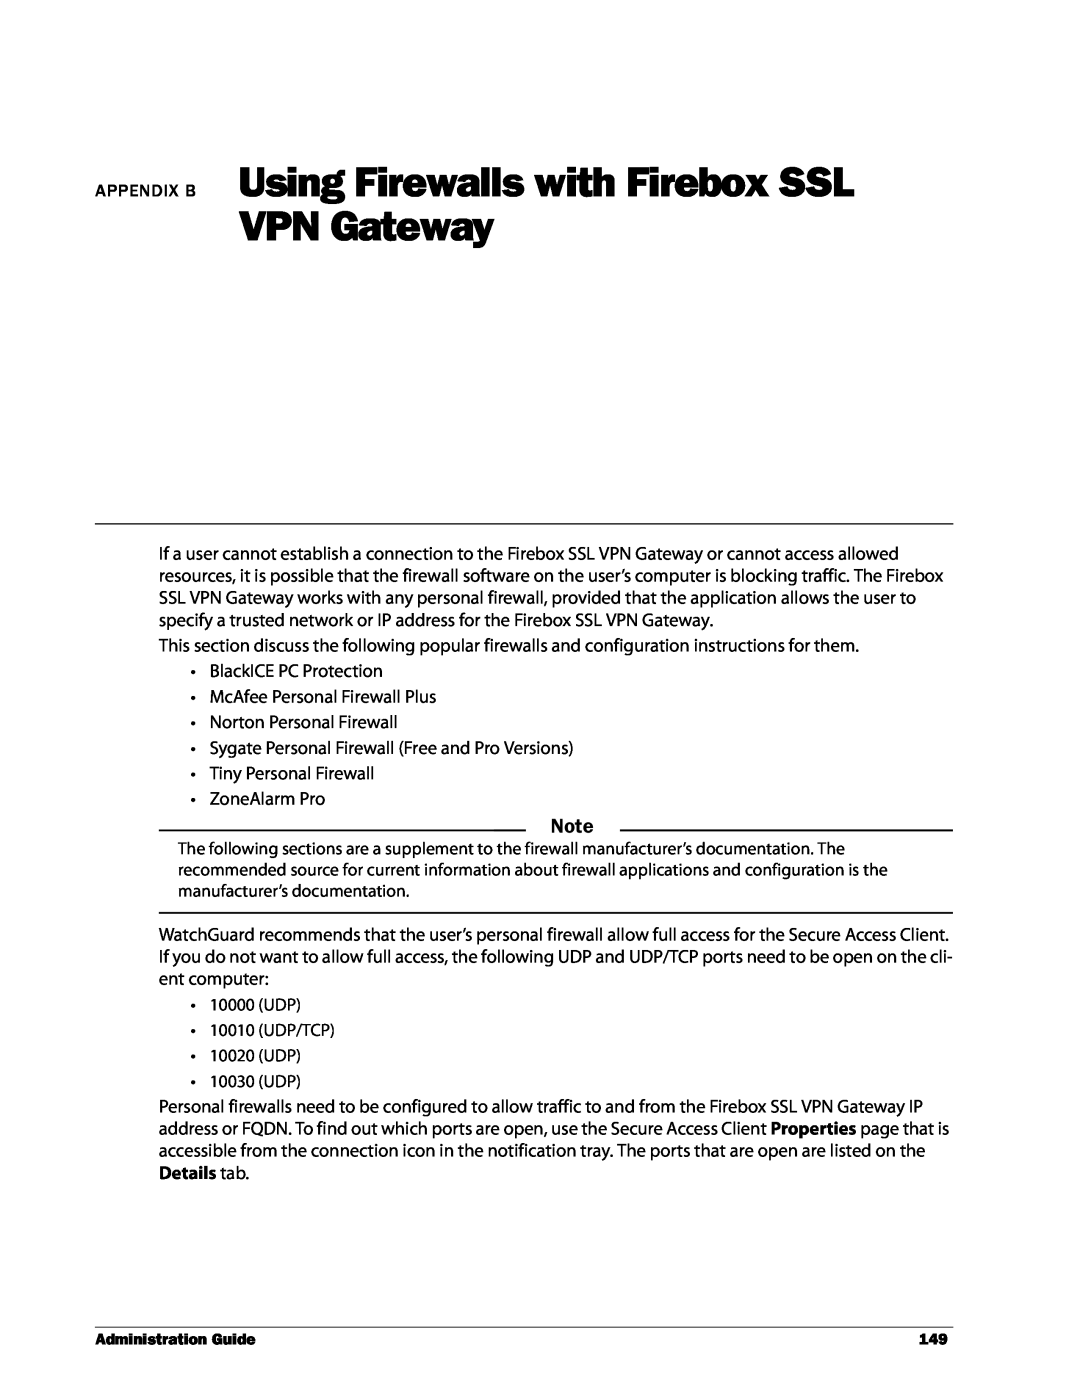 WatchGuard Technologies SSL VPN manual APPENDIX B Using Firewalls with Firebox SSL, VPN Gateway 